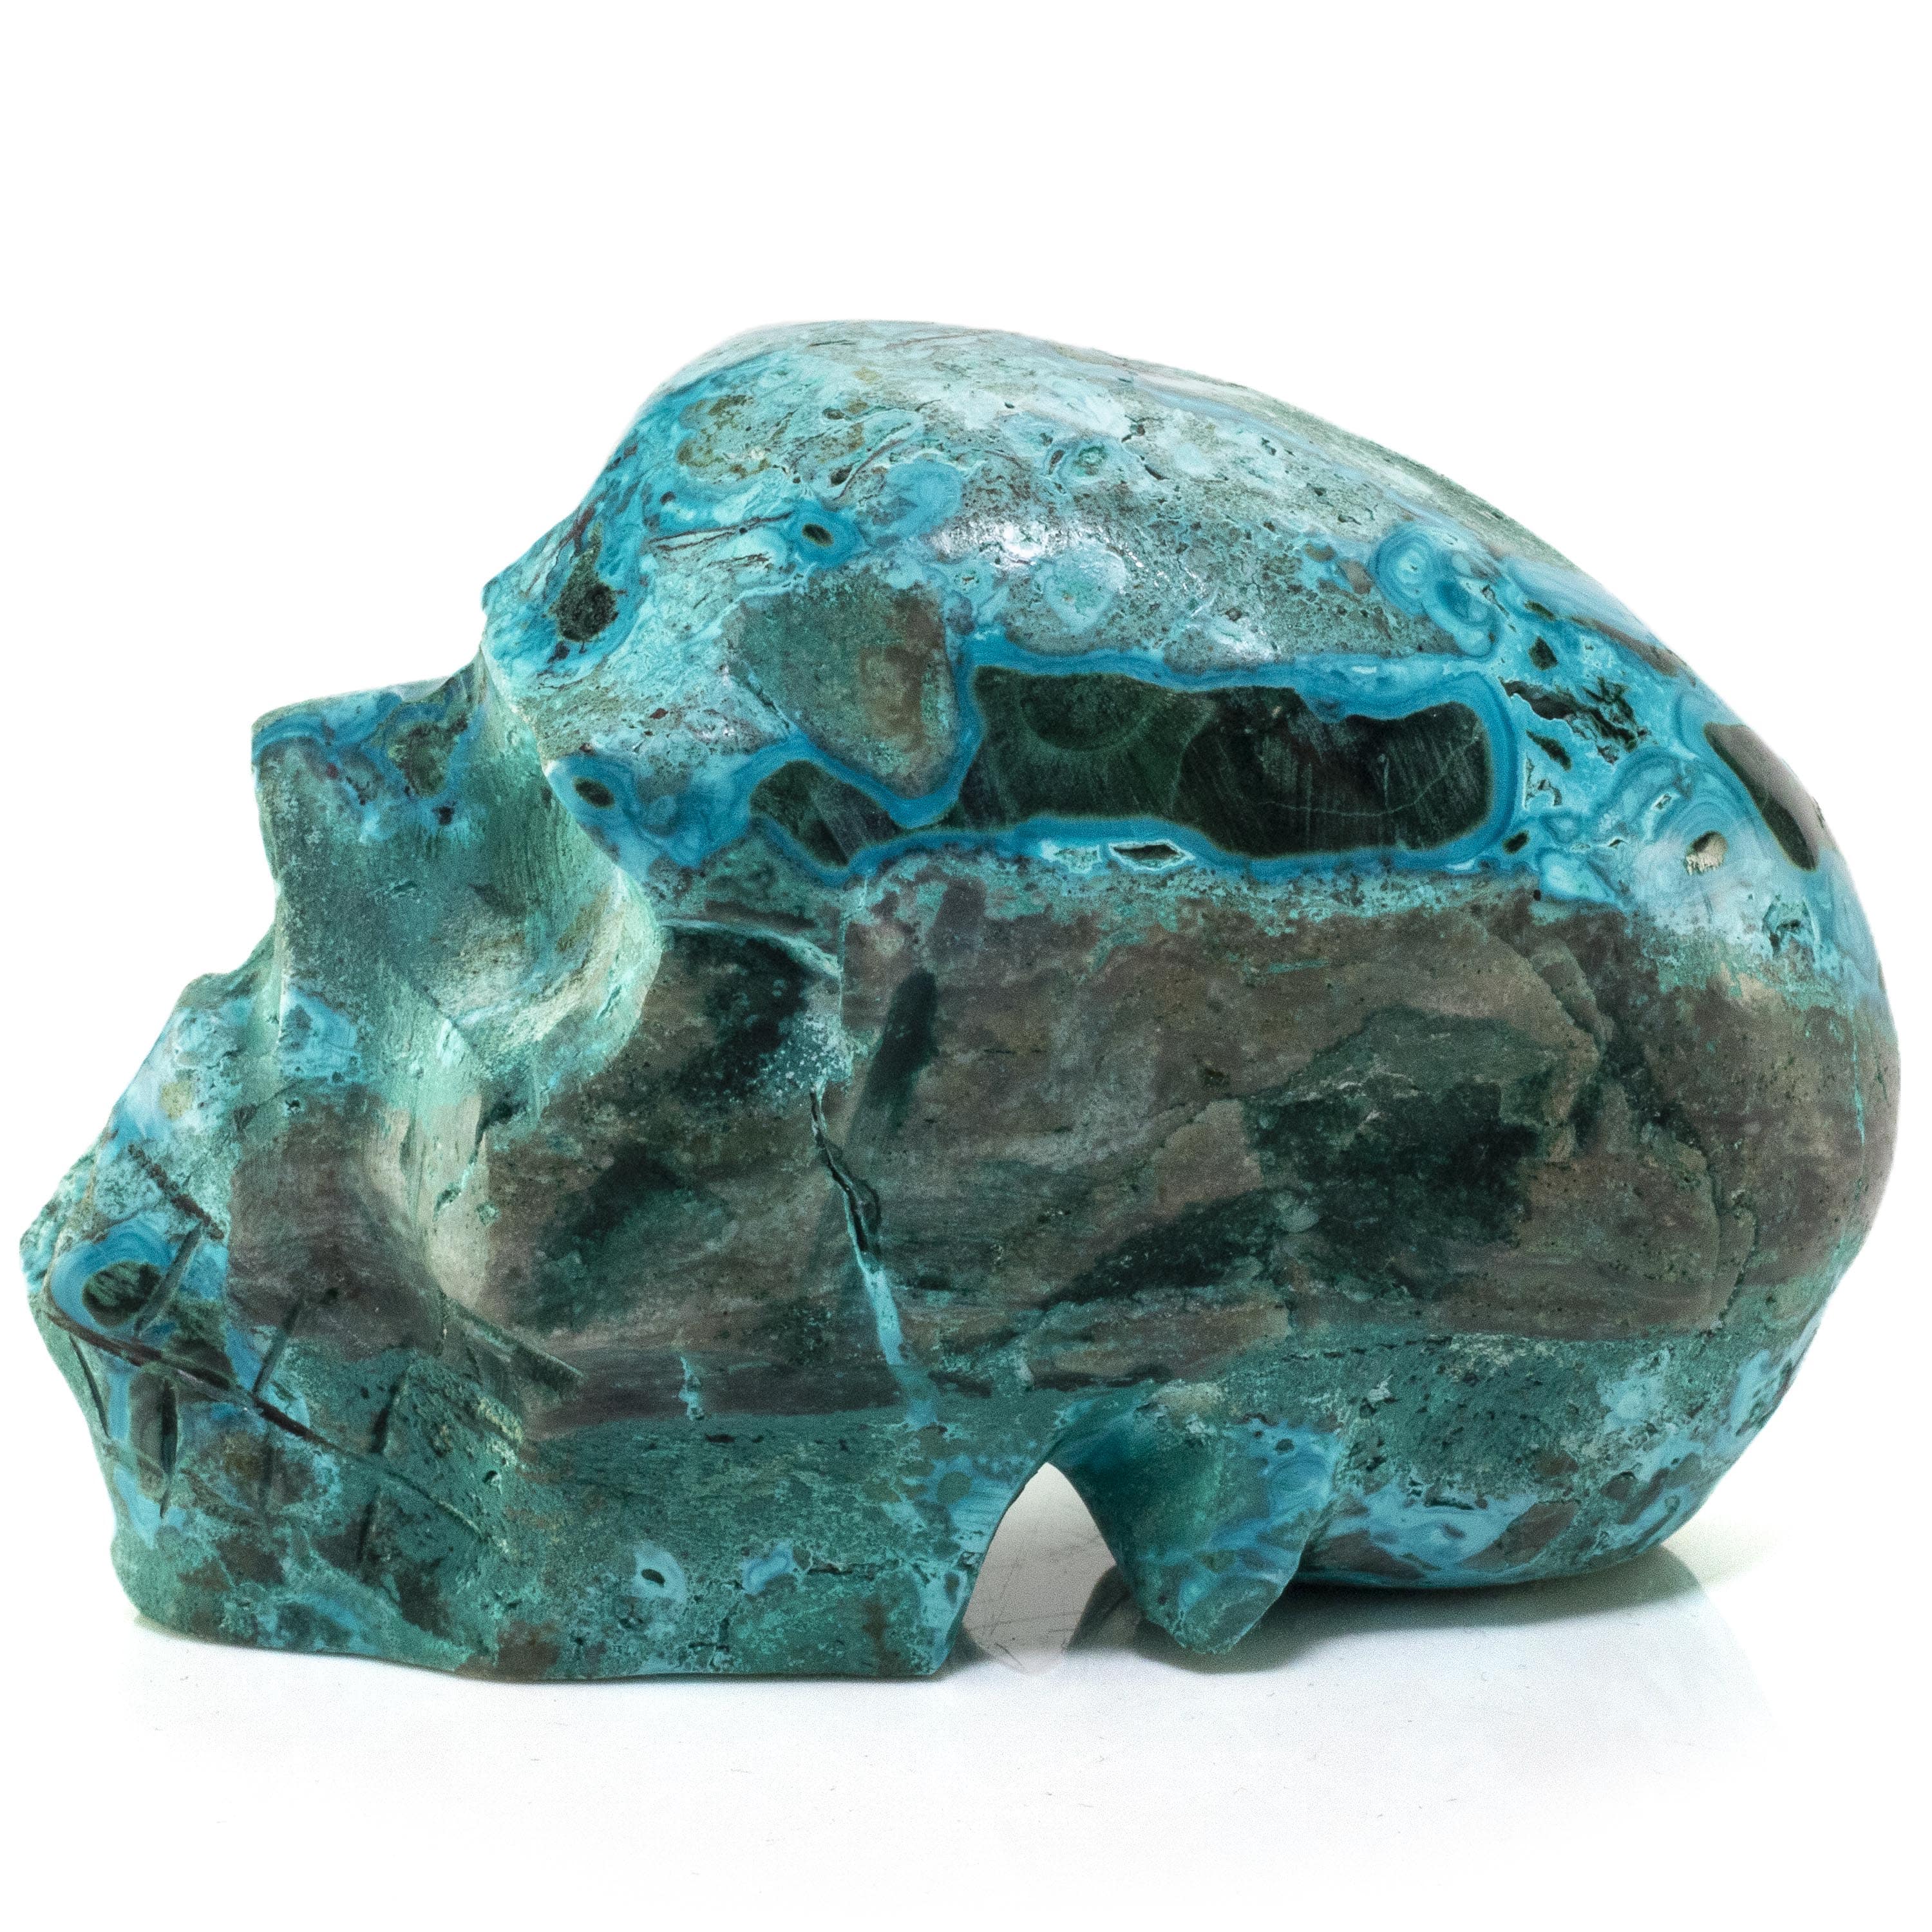 Kalifano Malachite Chrysocolla Skull Carving 3.5" / 242g SK900-CRY.001